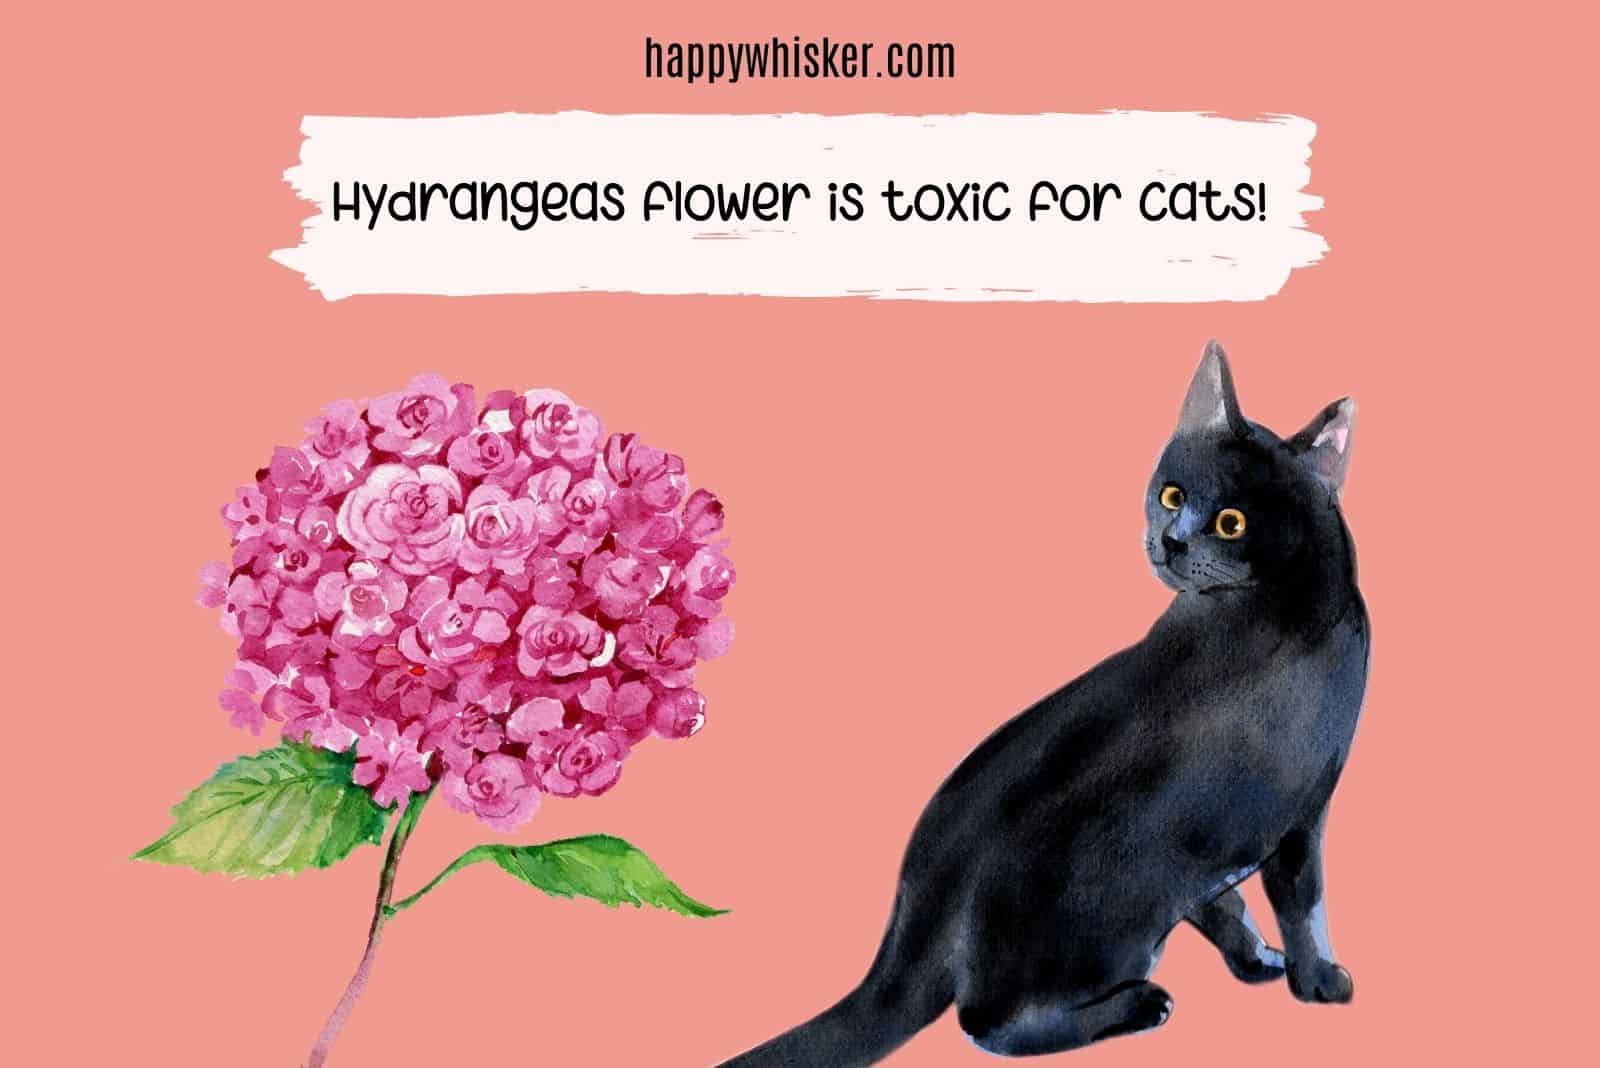 hydrangeas are toxic for cats